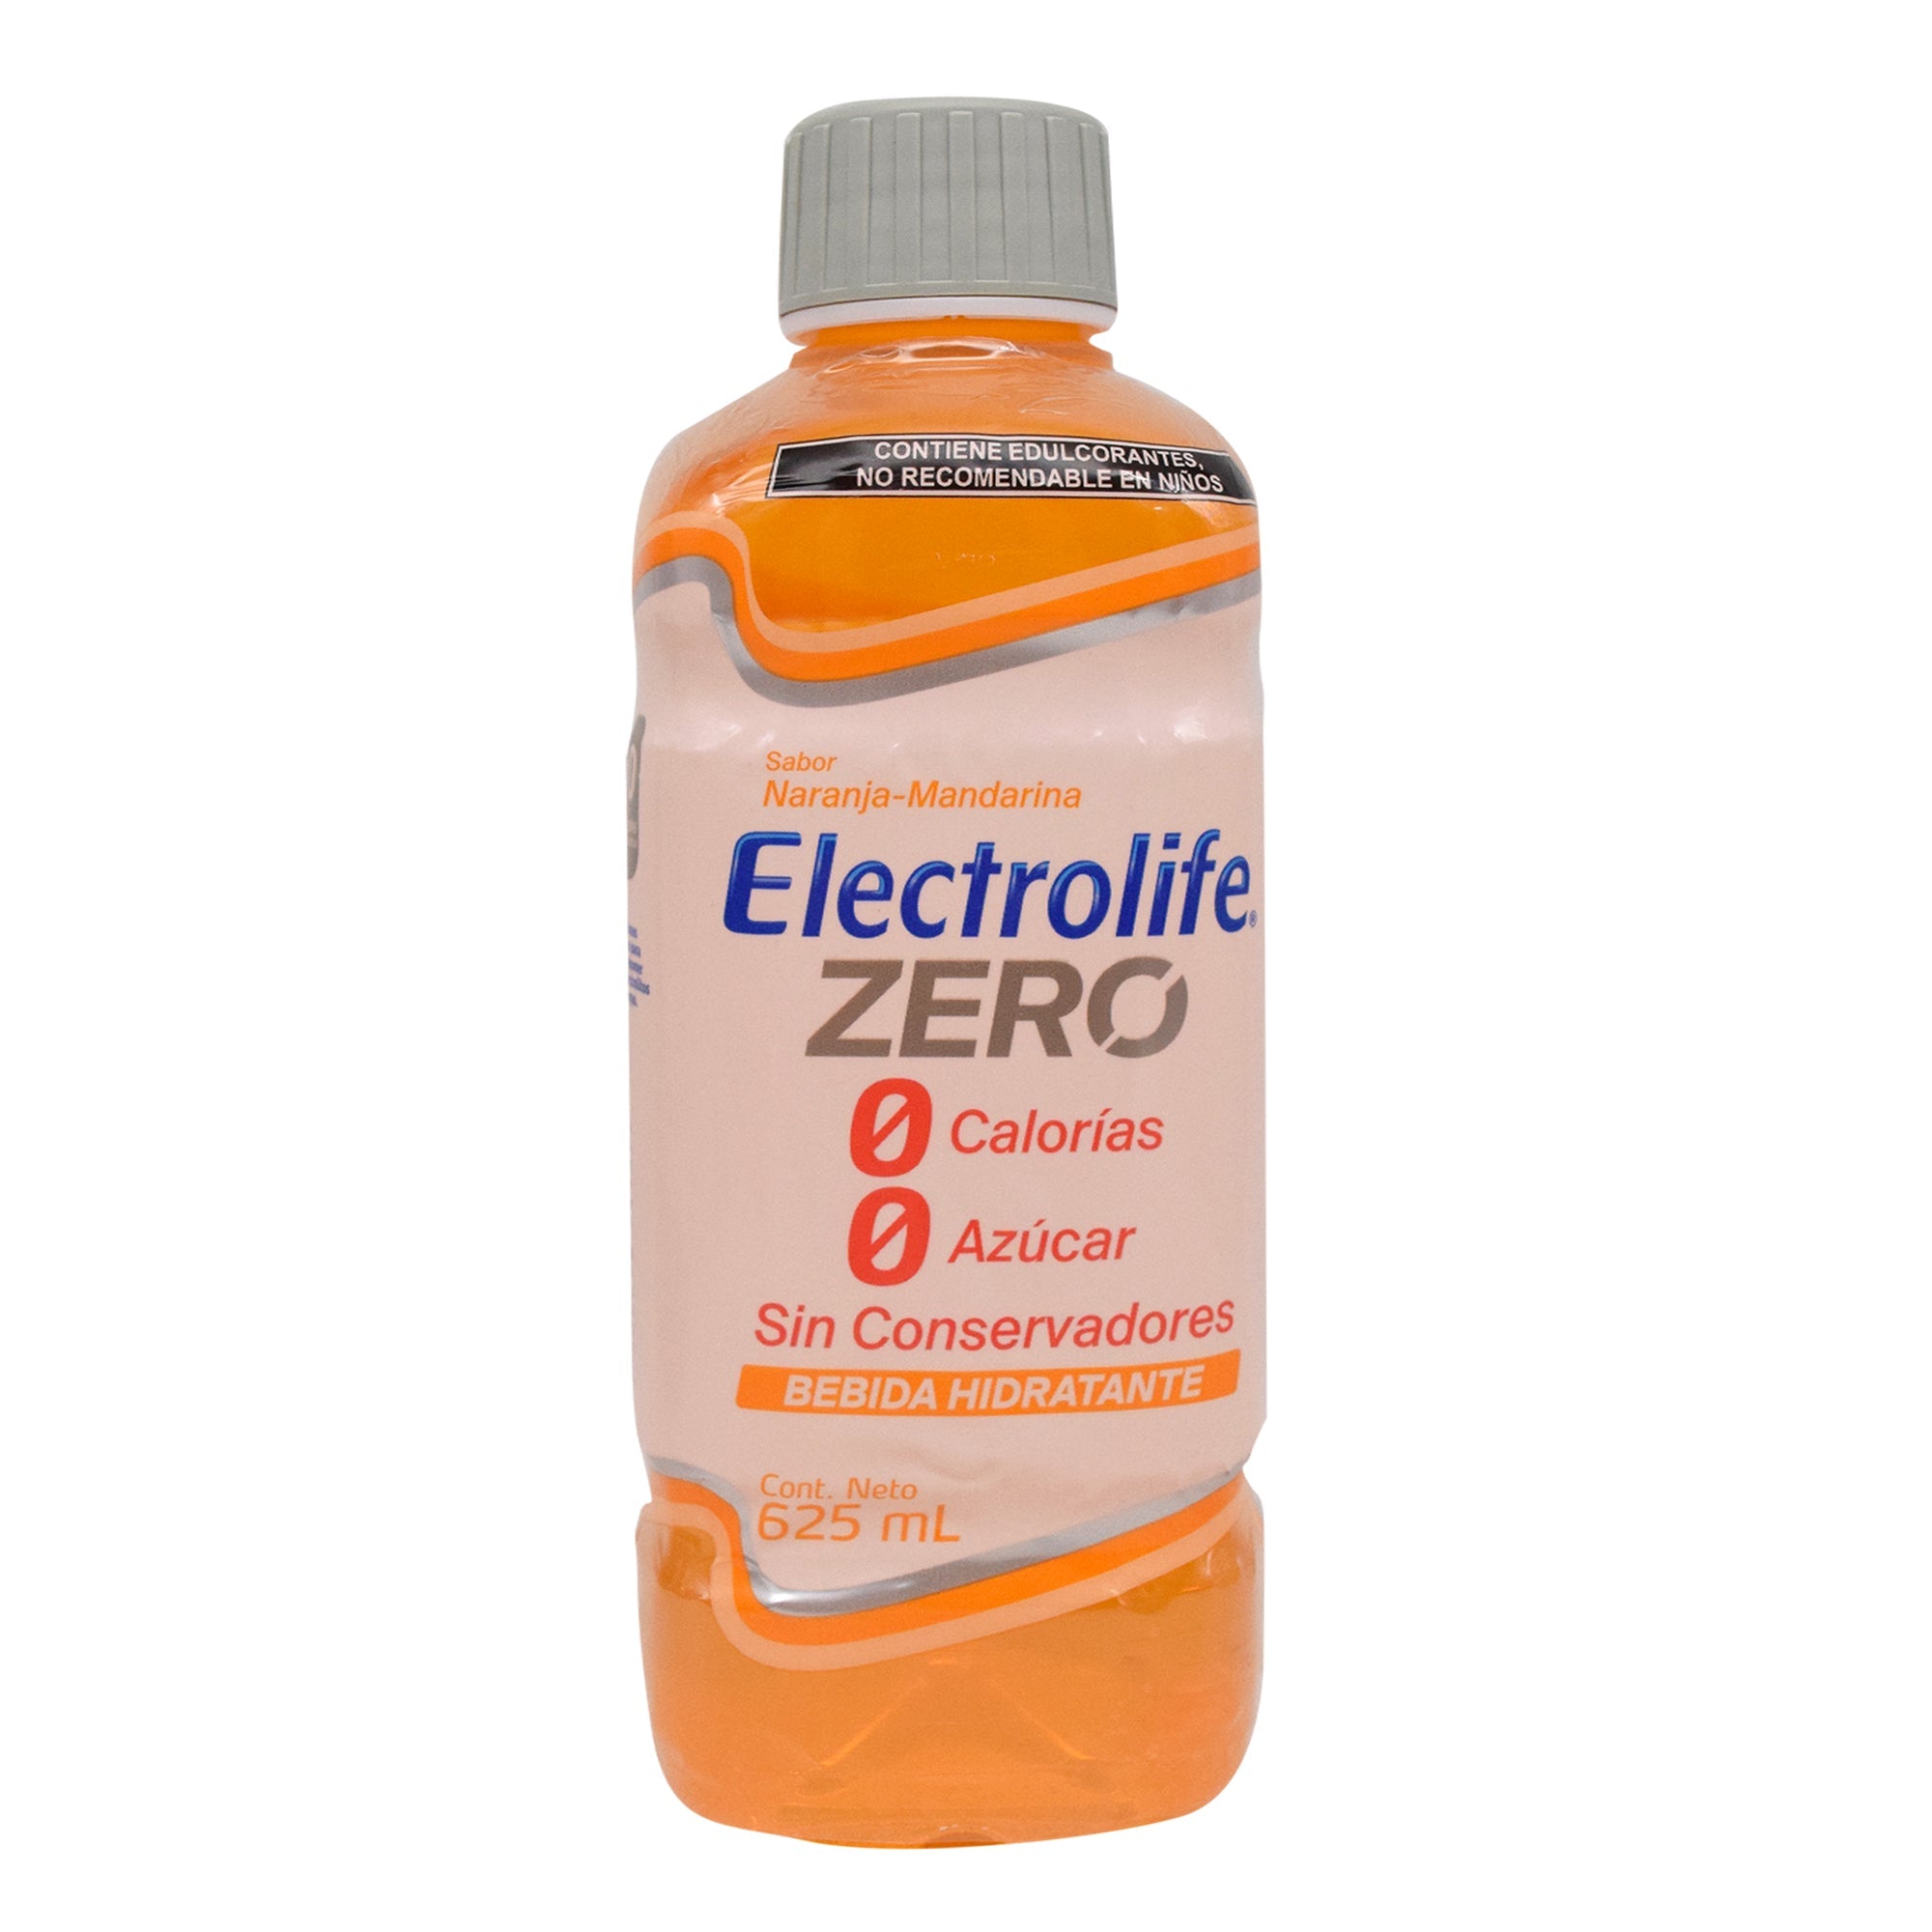 Electrolife naranja mandarina 625 ml